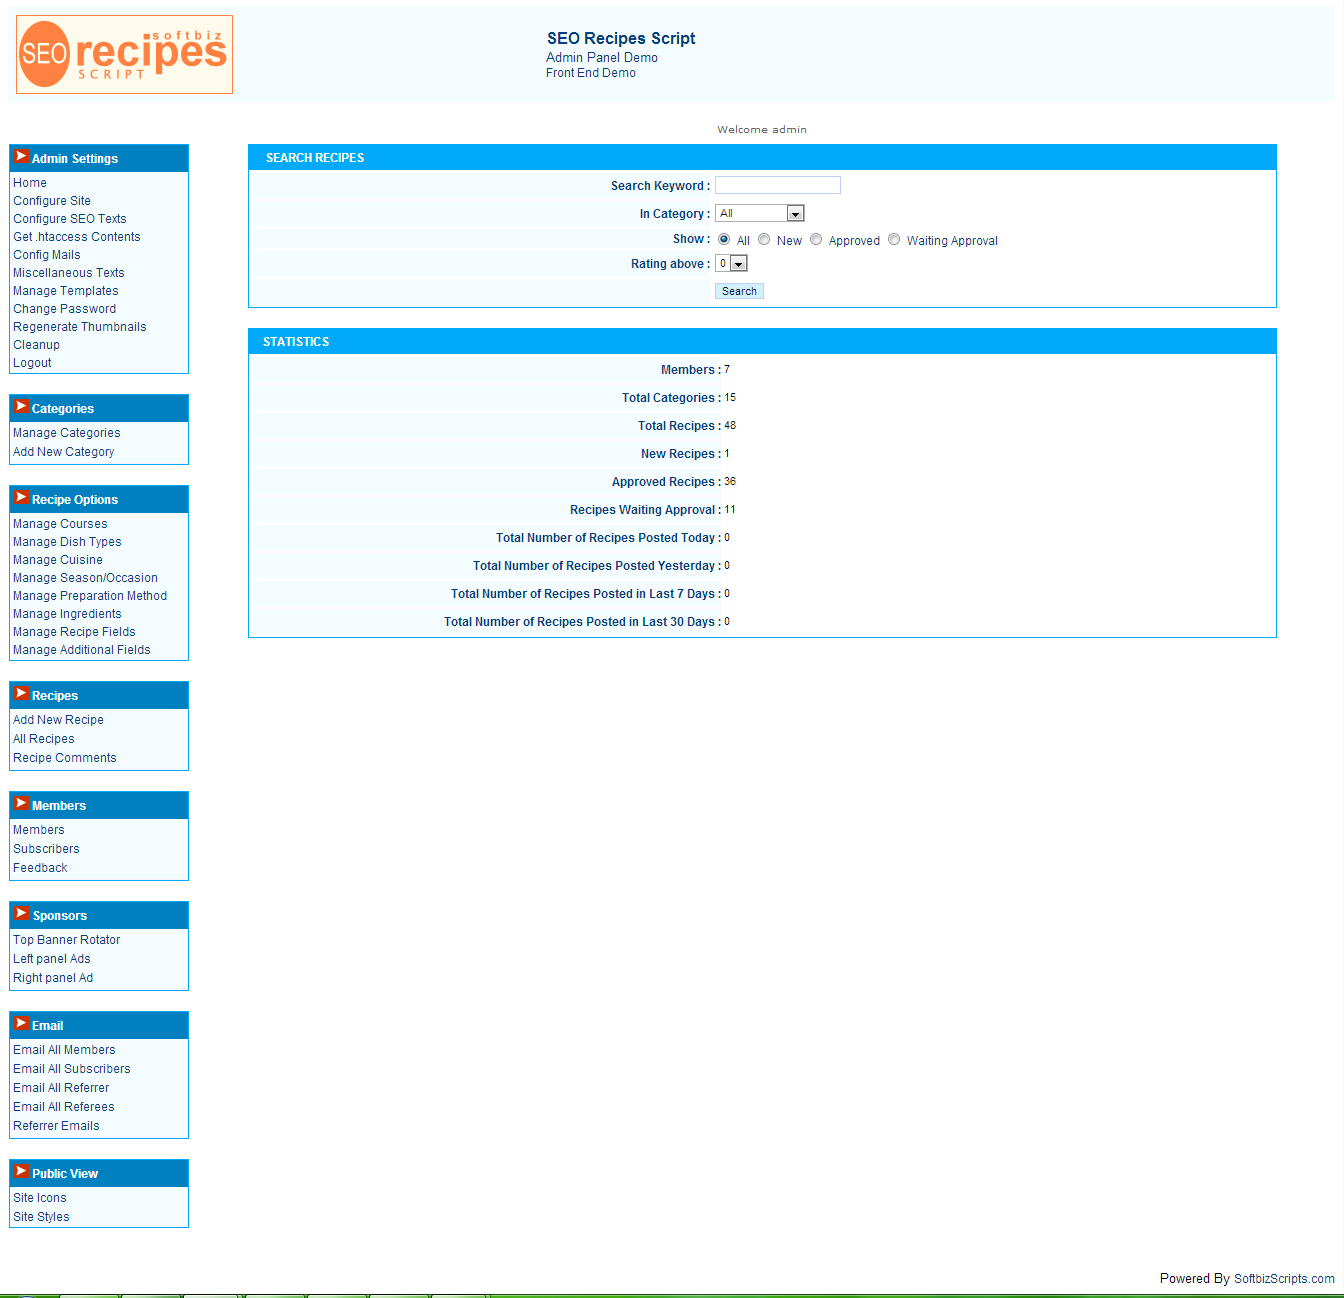 SEO-Recipes Script, Website Builder Software Screenshot